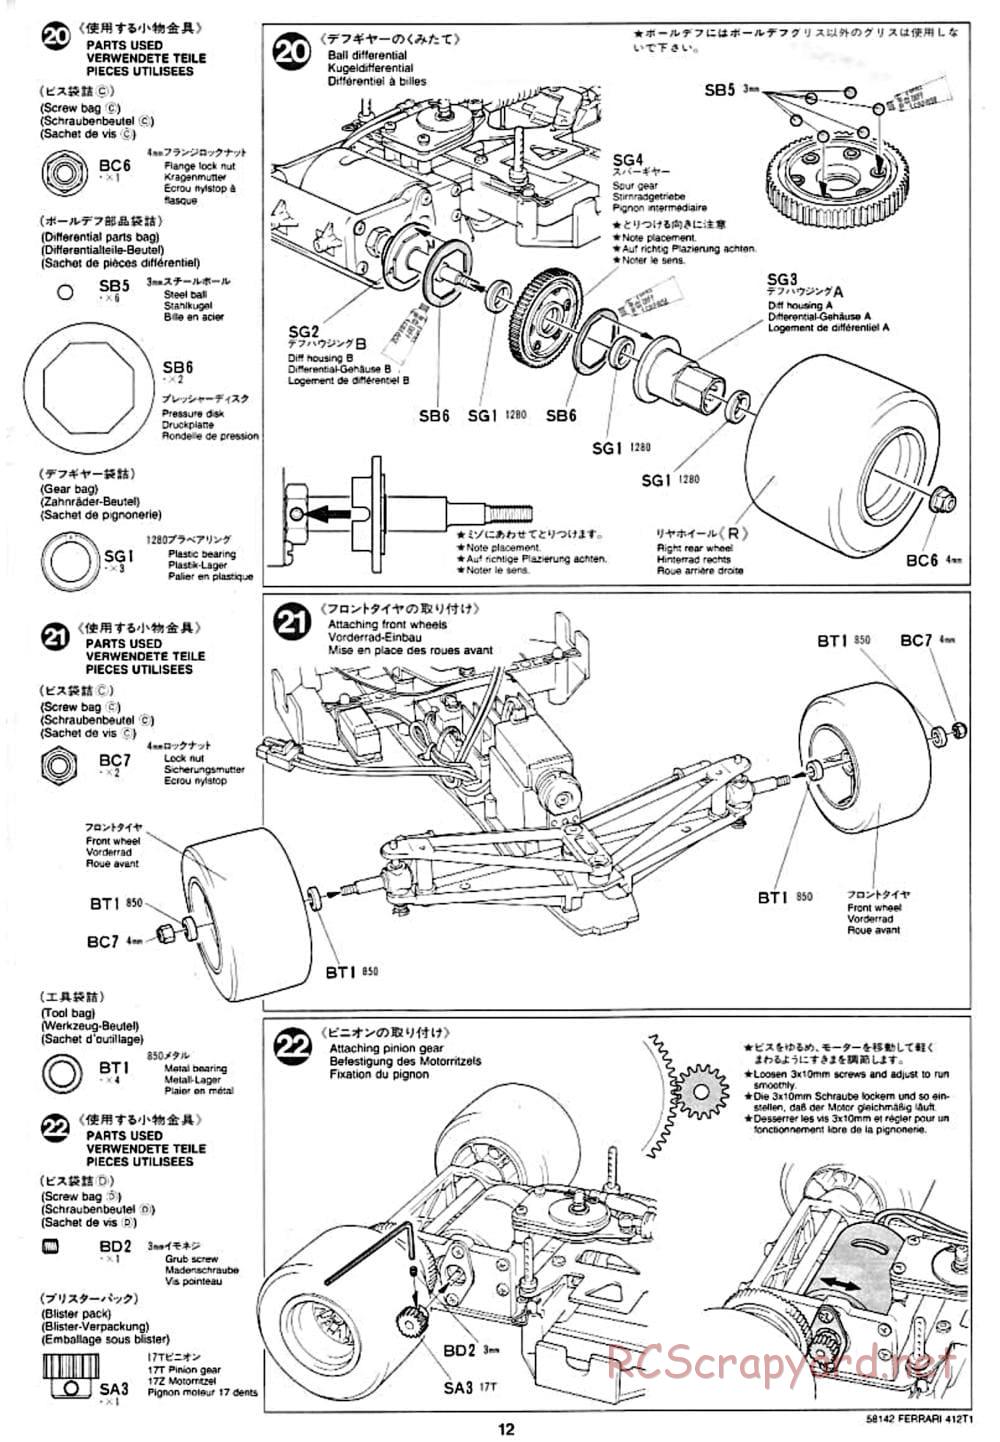 Tamiya - Ferrari 412T1 - F103 Chassis - Manual - Page 12